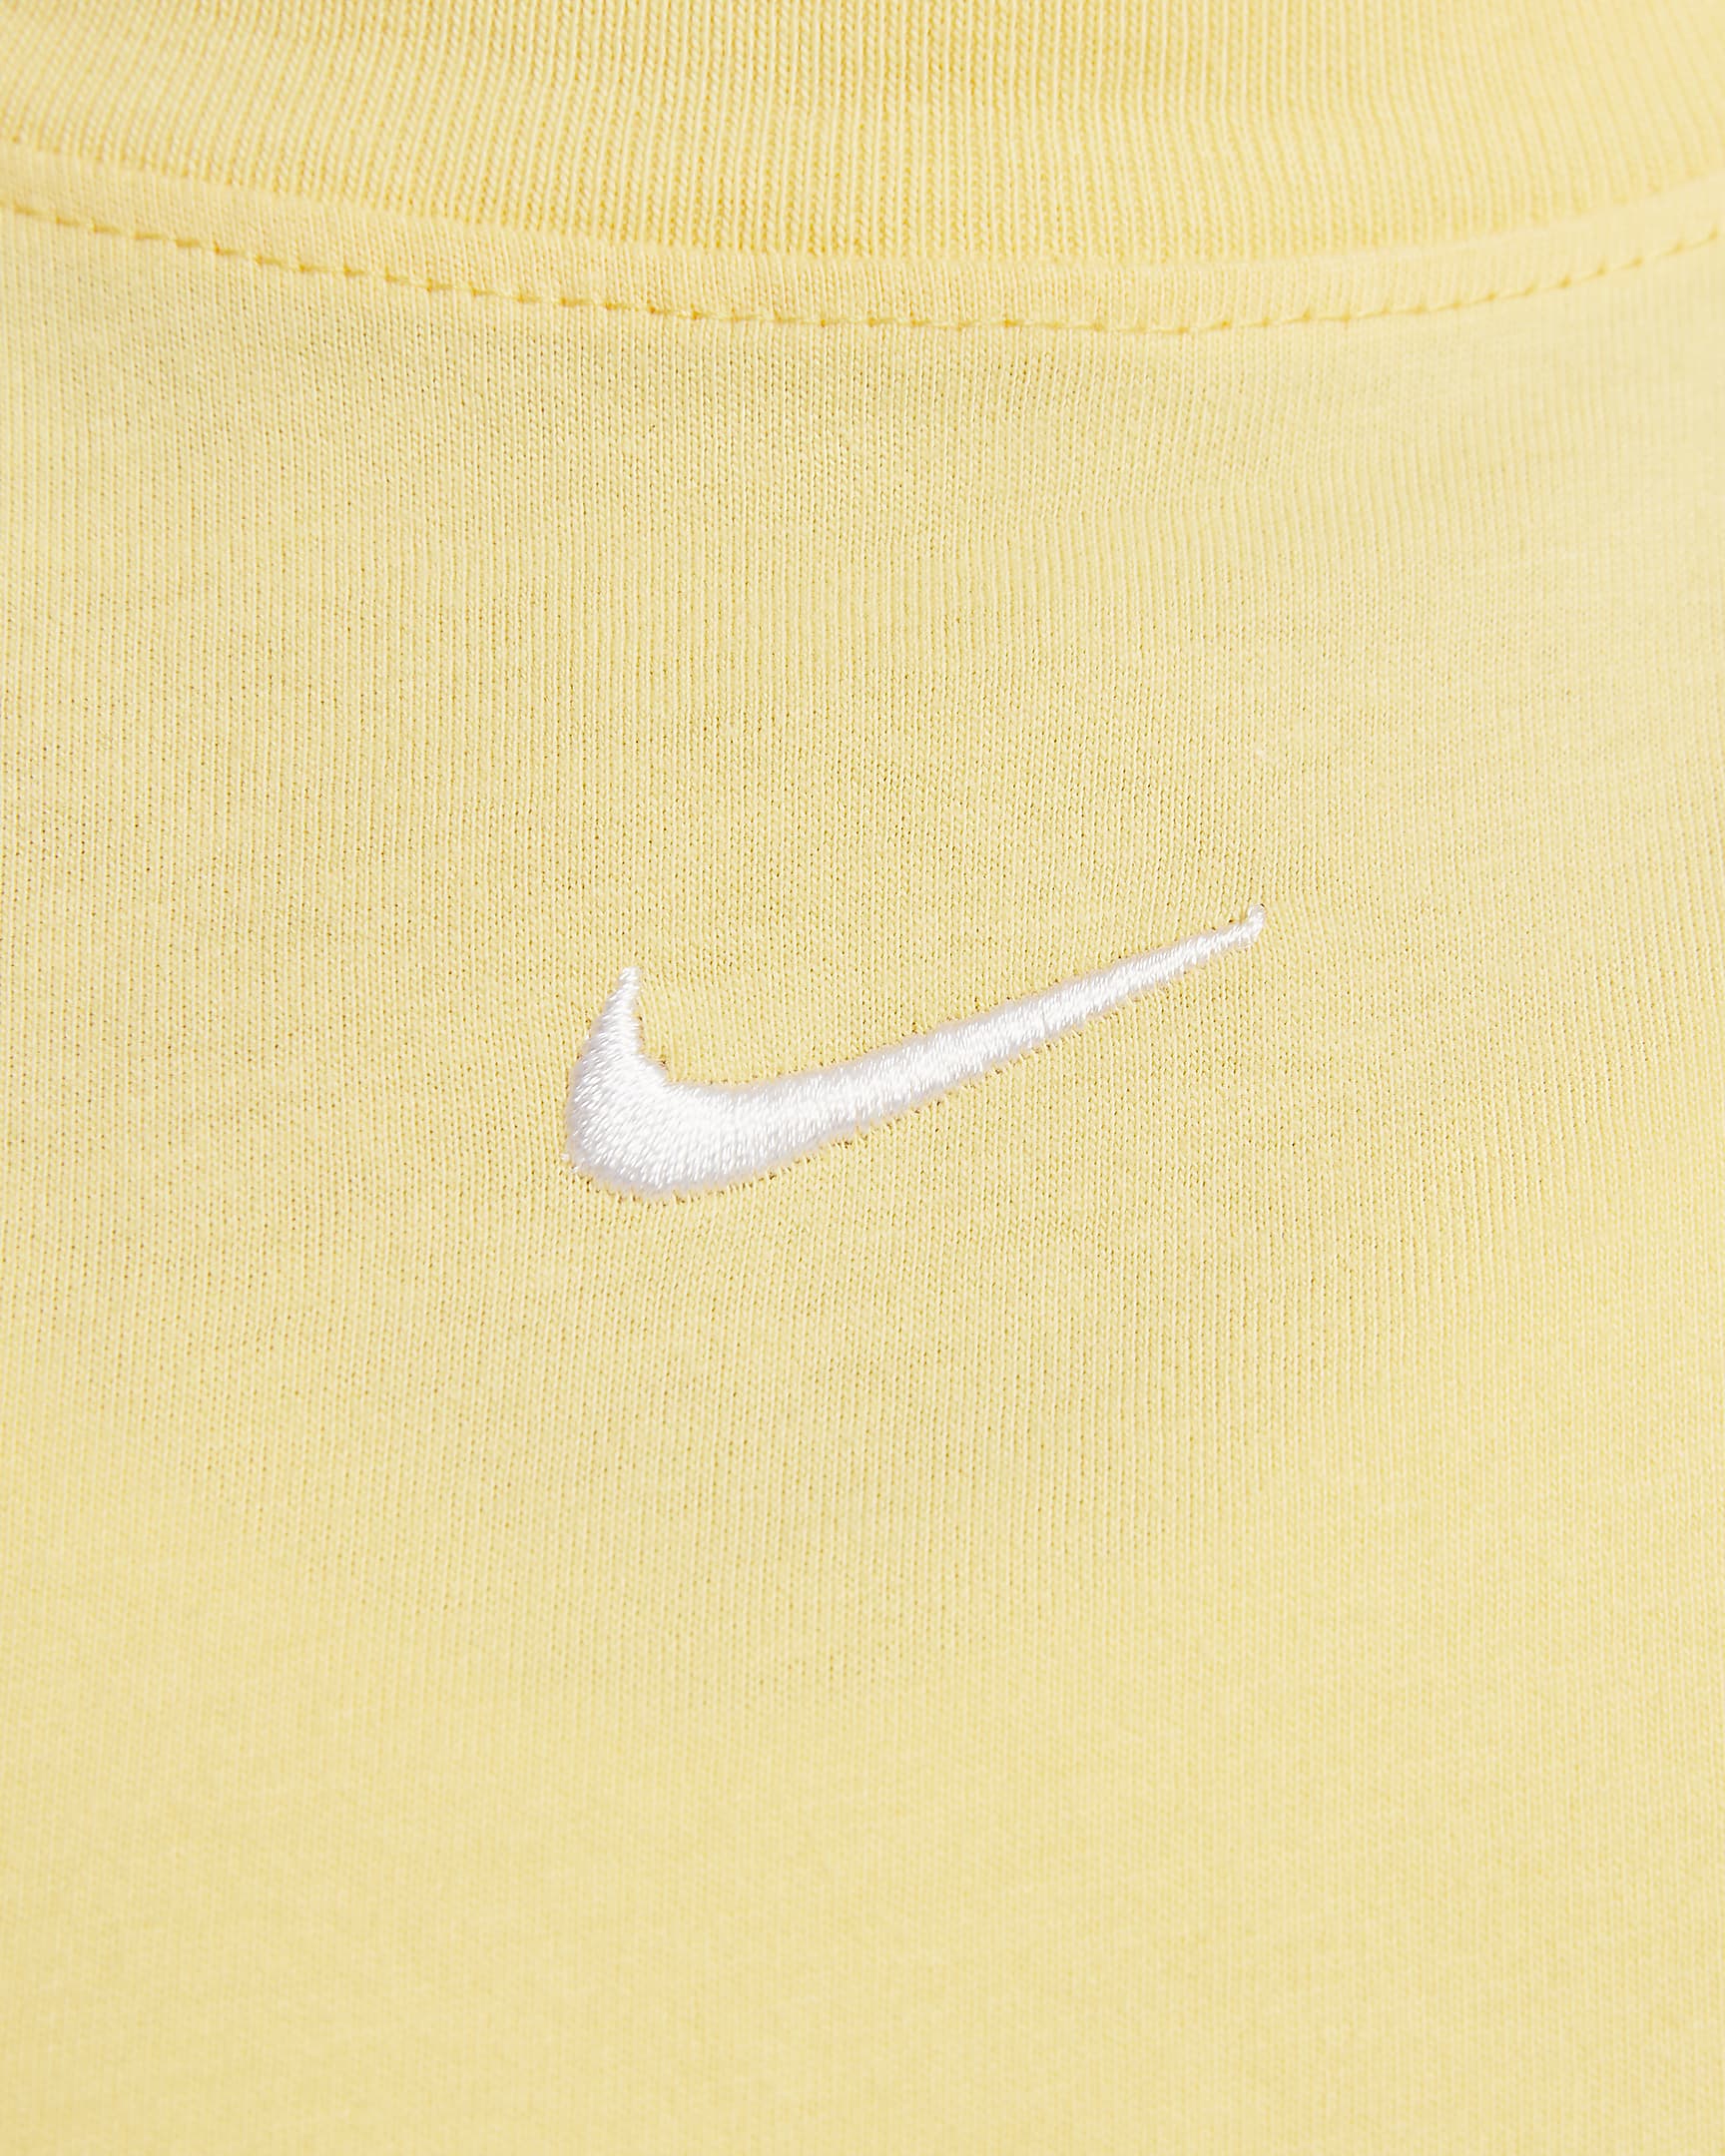 Nike Sportswear Chill Knit Women's Oversized T-Shirt Dress. Nike UK